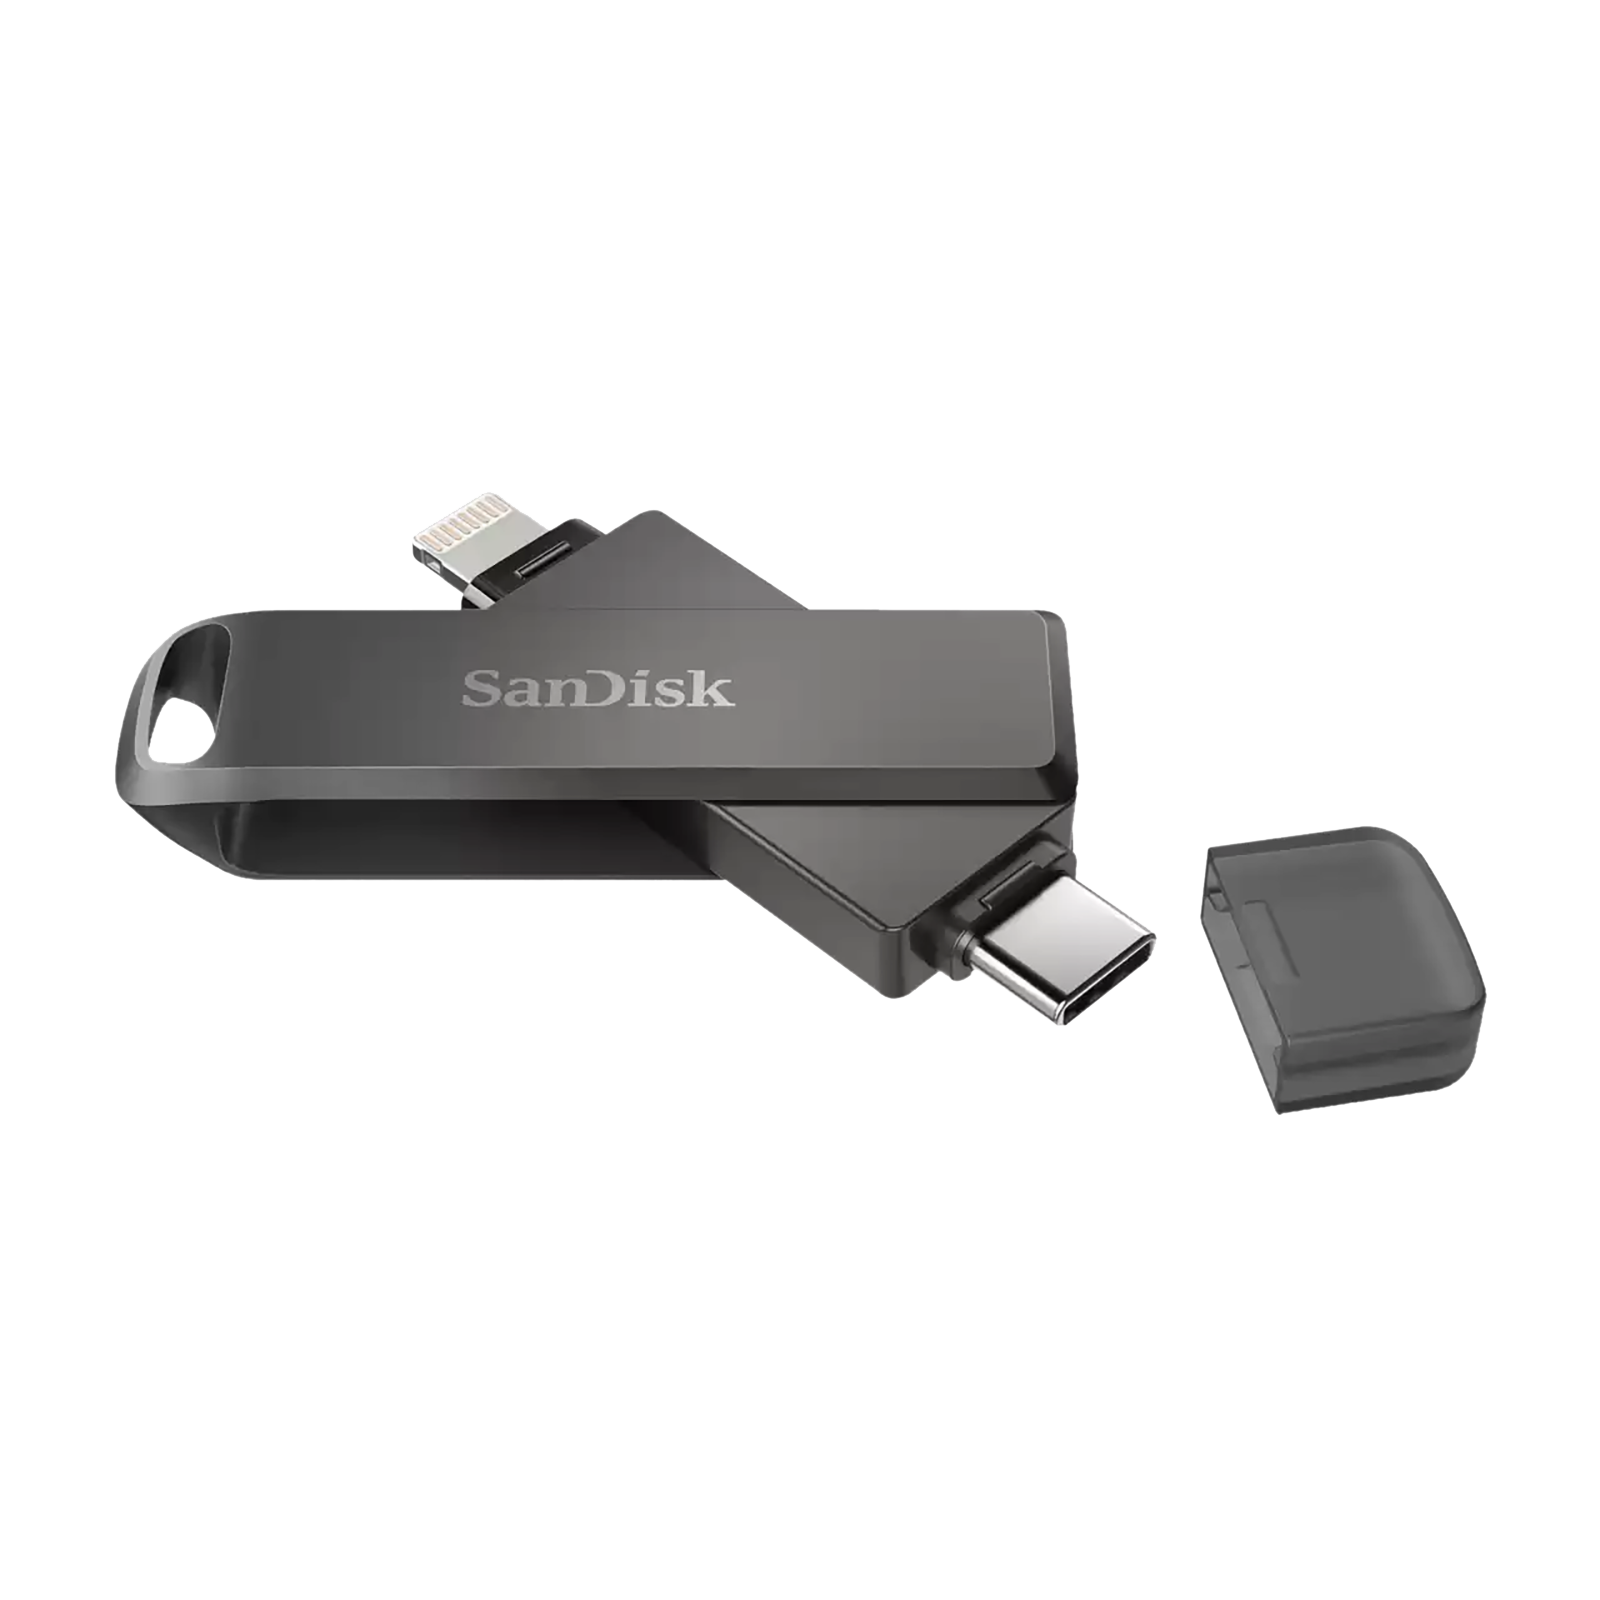 SanDisk iXpand Flash Drive Luxe 128GB, Clé Lightning et USB Type-C